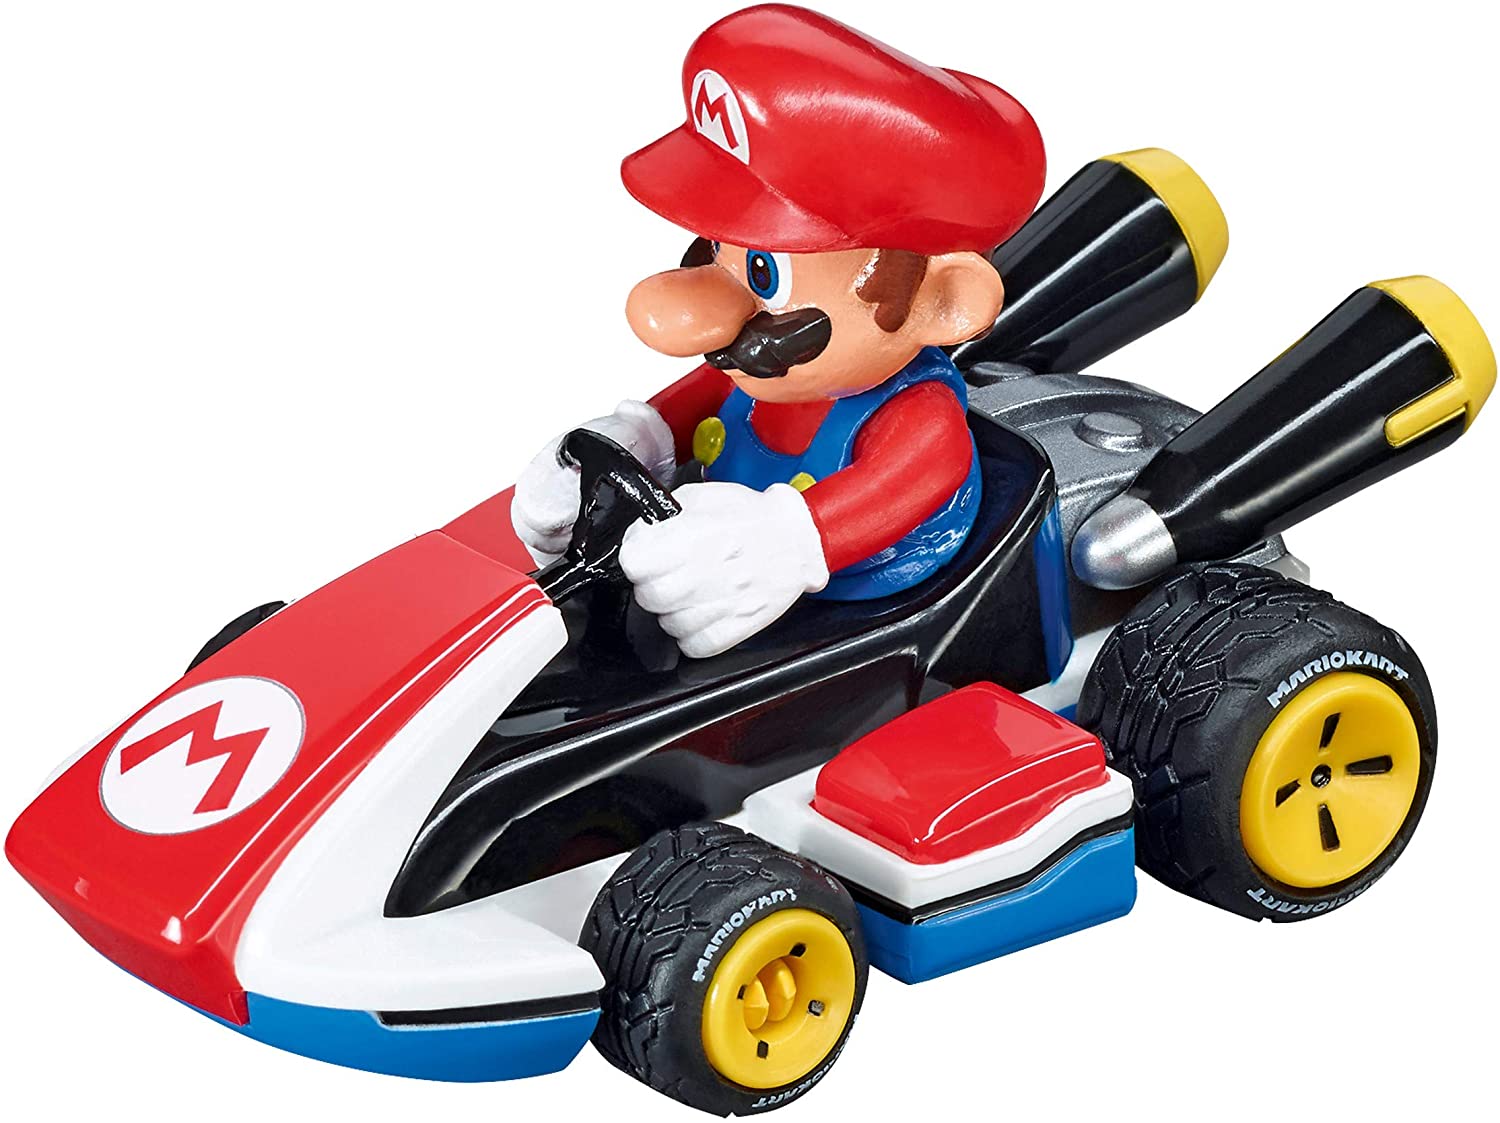 Трек Carrera Go: Nintendo Mario Kart 8  